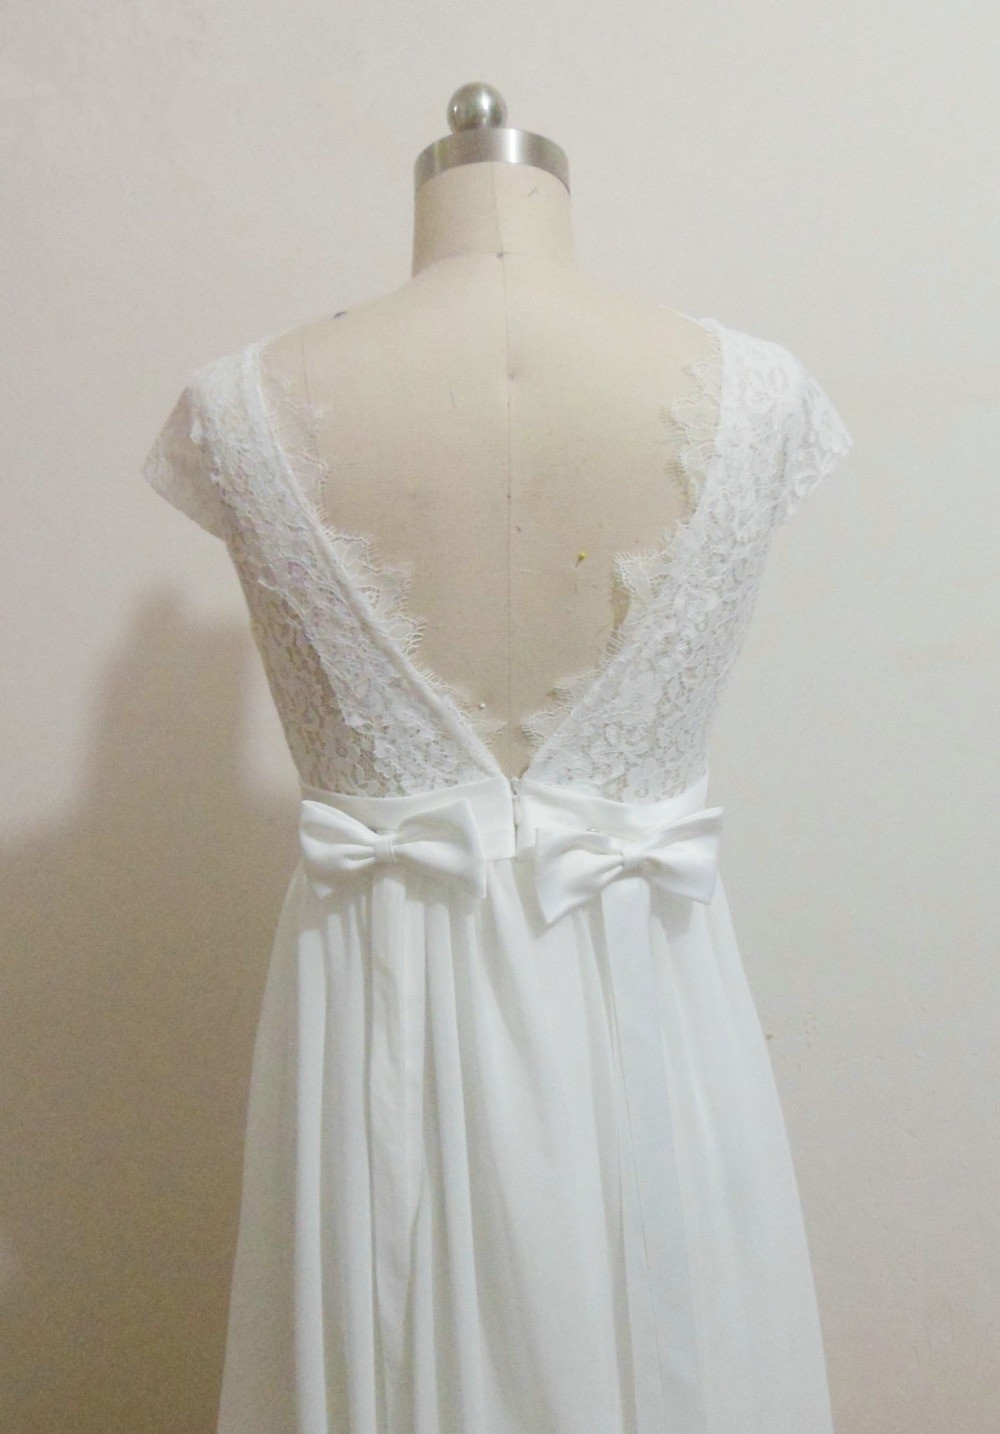 Double Bow Back Lace Cap Sleeves White Chiffon Boho Wedding Dresses 2017 Beach Wedding Gowns